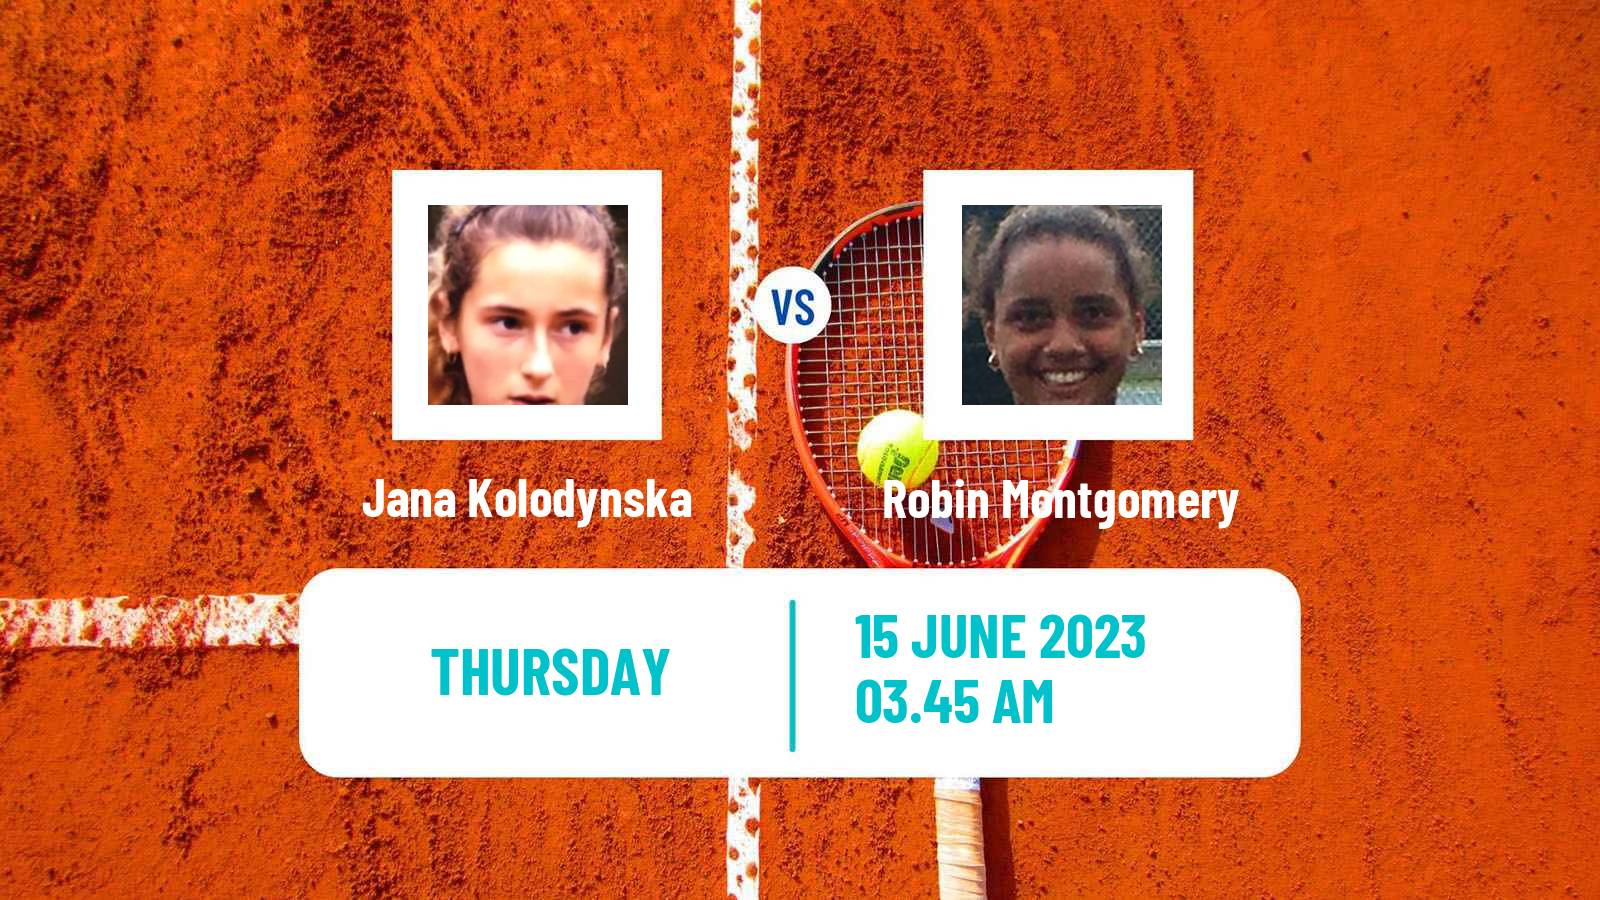 Tennis ITF W60 Madrid Women Jana Kolodynska - Robin Montgomery